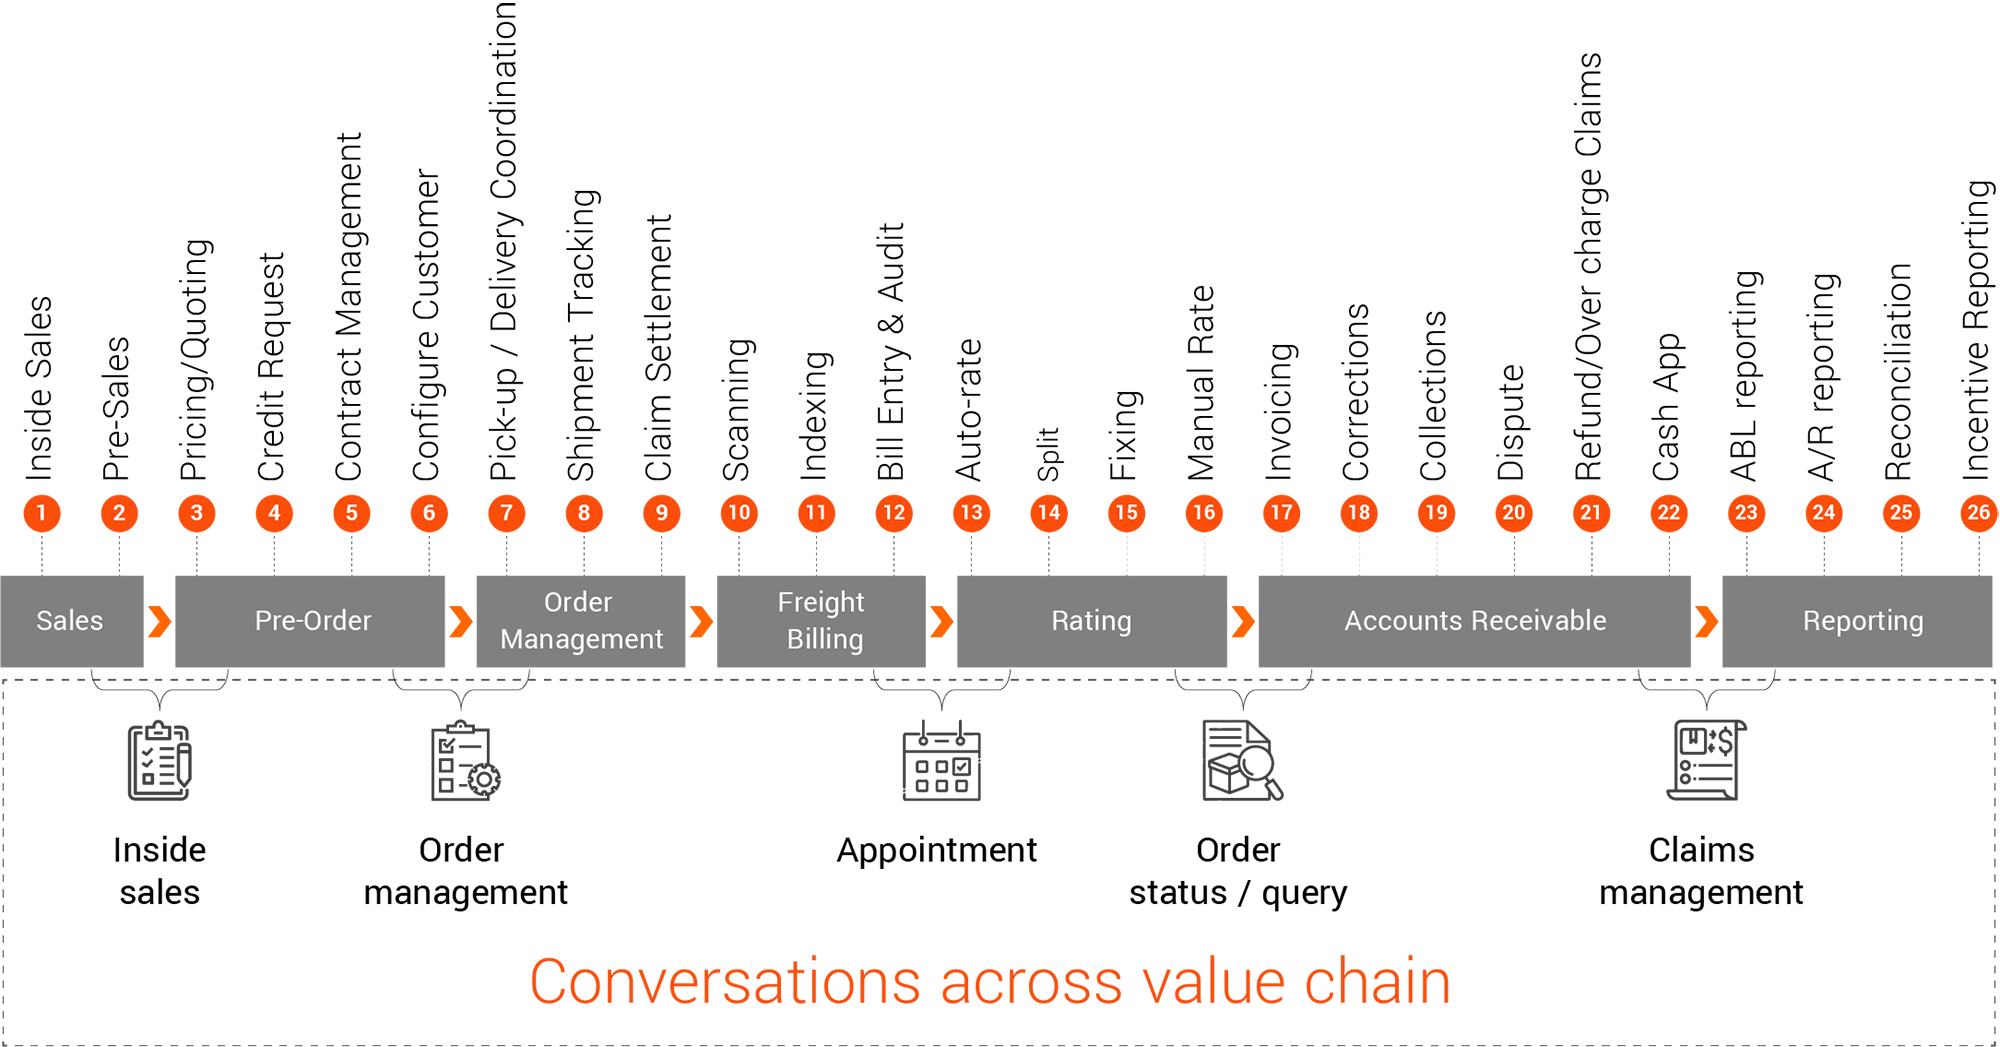 Conversations across value chain